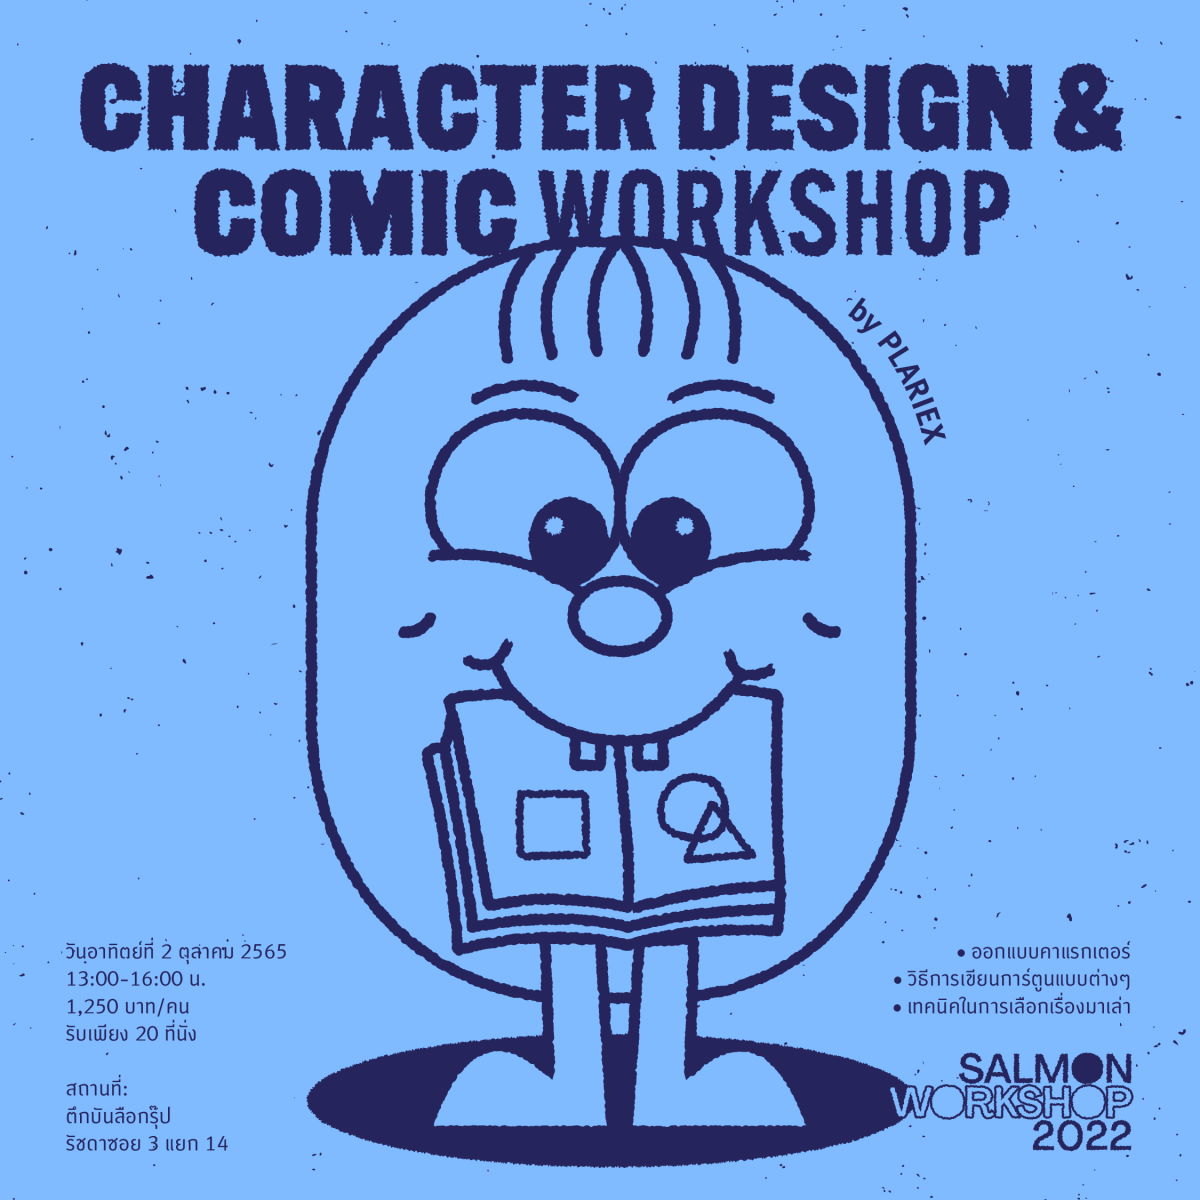 Salmon Workshop 2022: Character Design & Comic Workshop